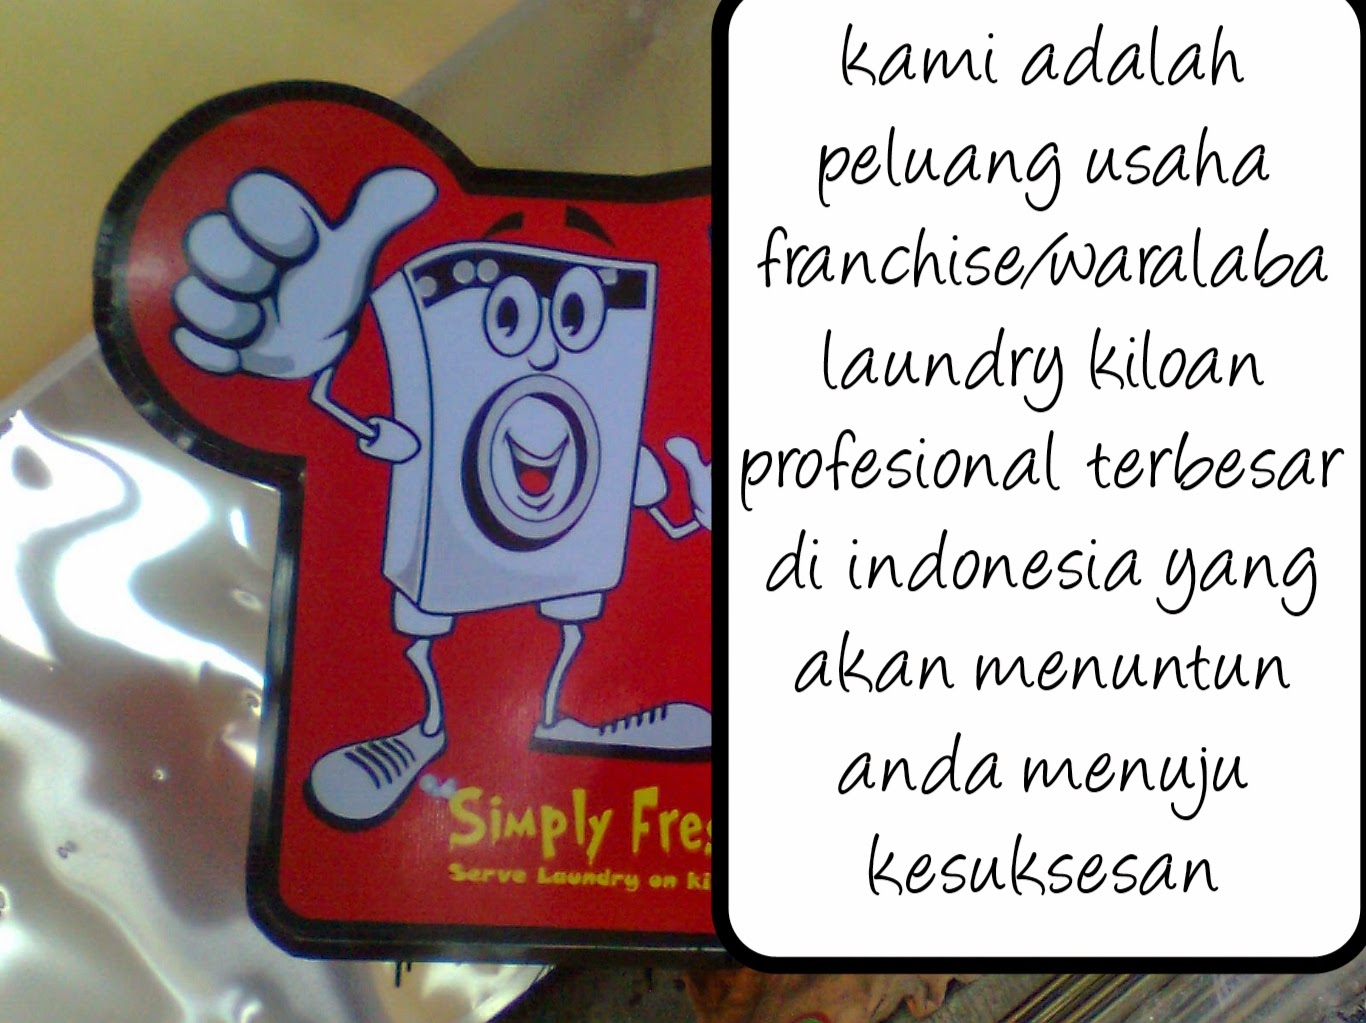 peluang usaha franchise / waralaba laundry kiloan profesional terbesar di indonesia